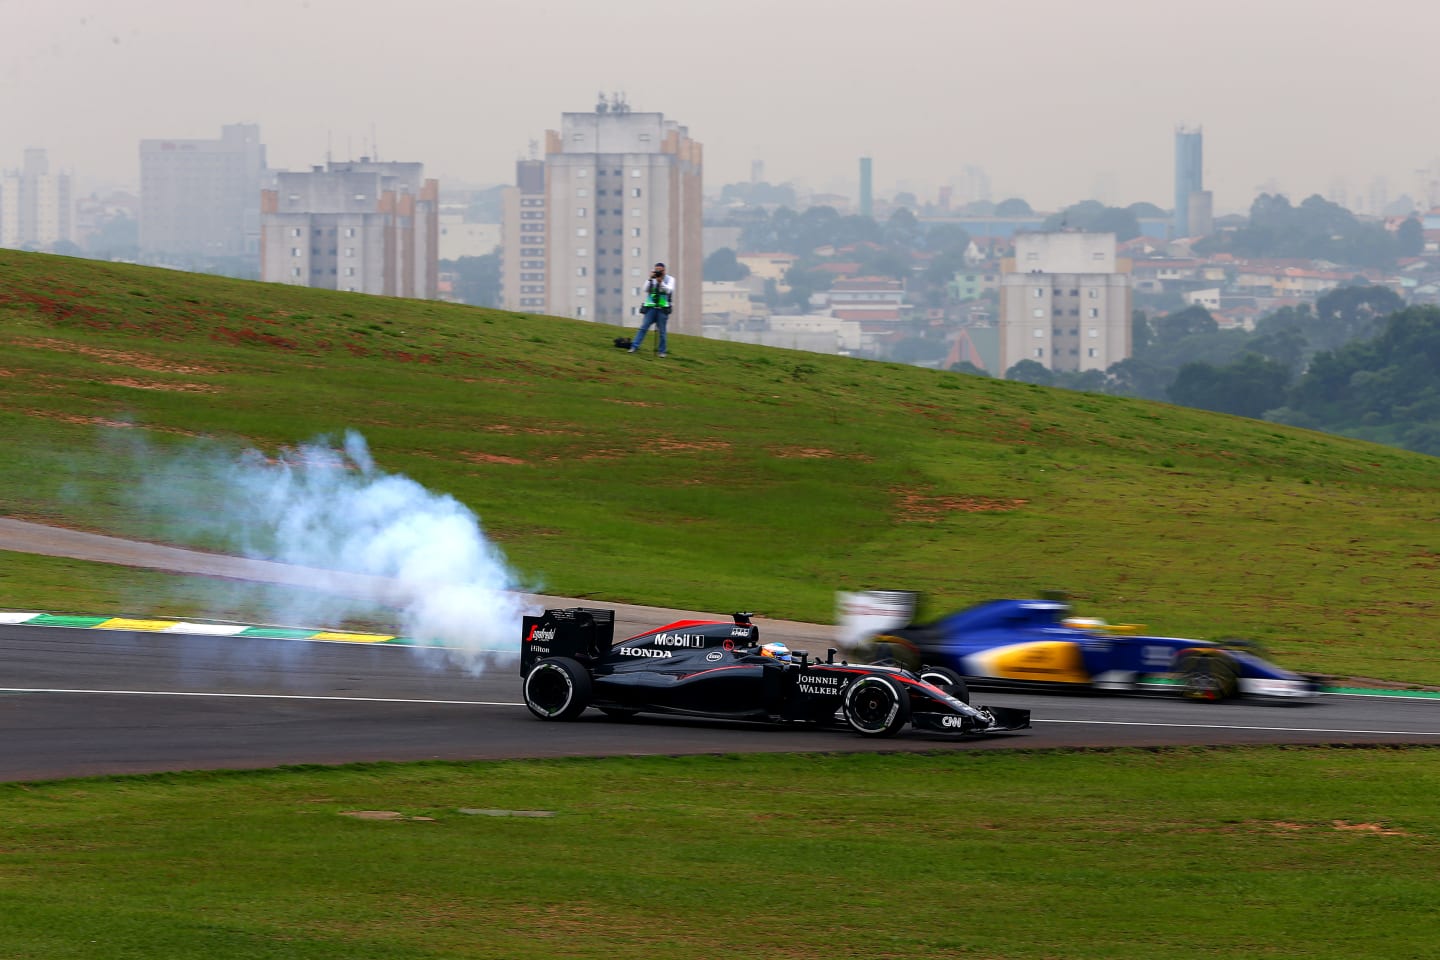 McLaren-Honda’s hopes often went up in smoke during their second partnership